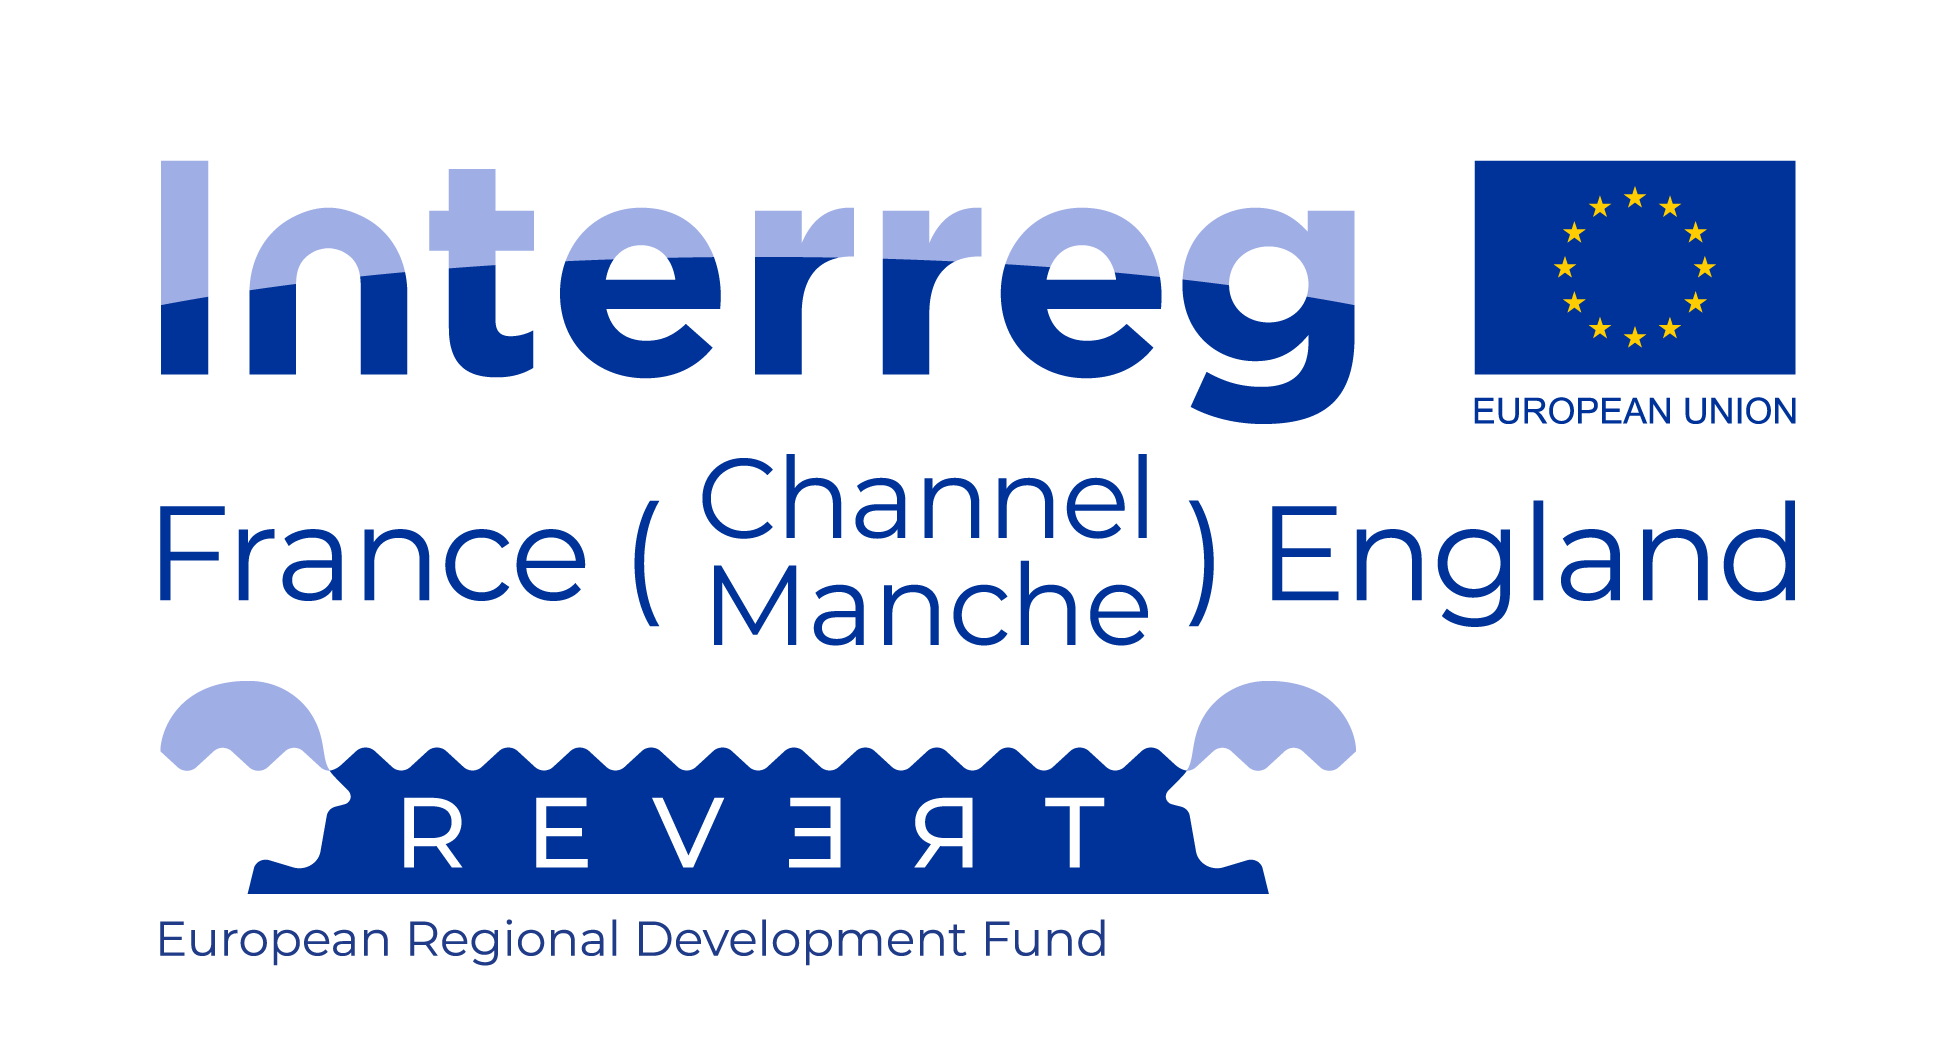 REVERT Interreg logo with EU flag and dark blue text